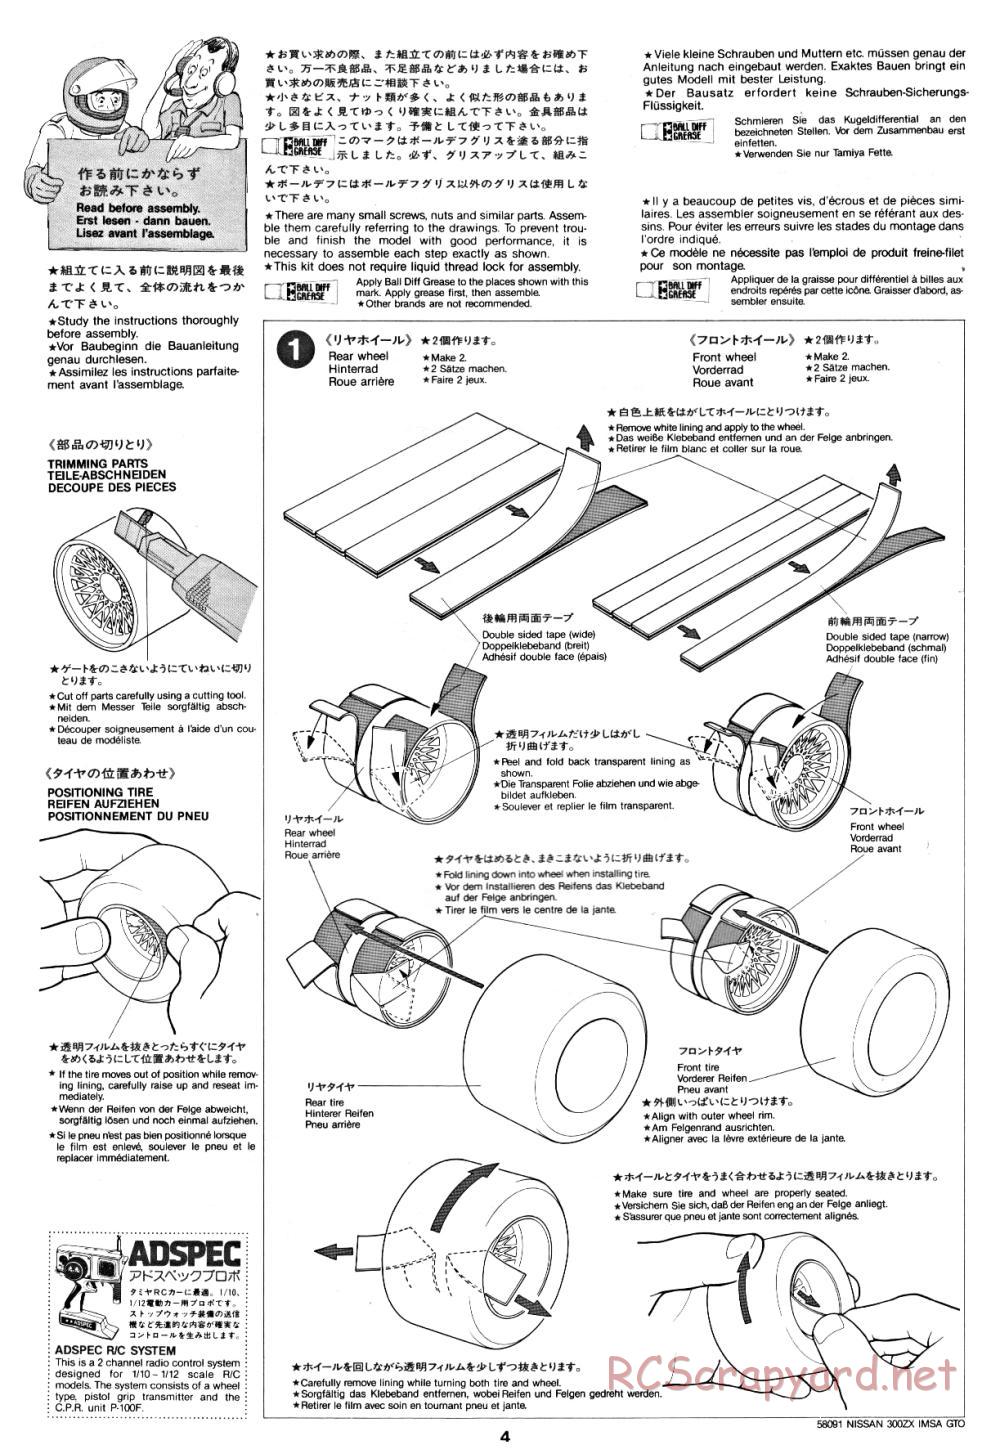 Tamiya - Nissan 300ZX IMSA GTO - 58091 - Manual - Page 4